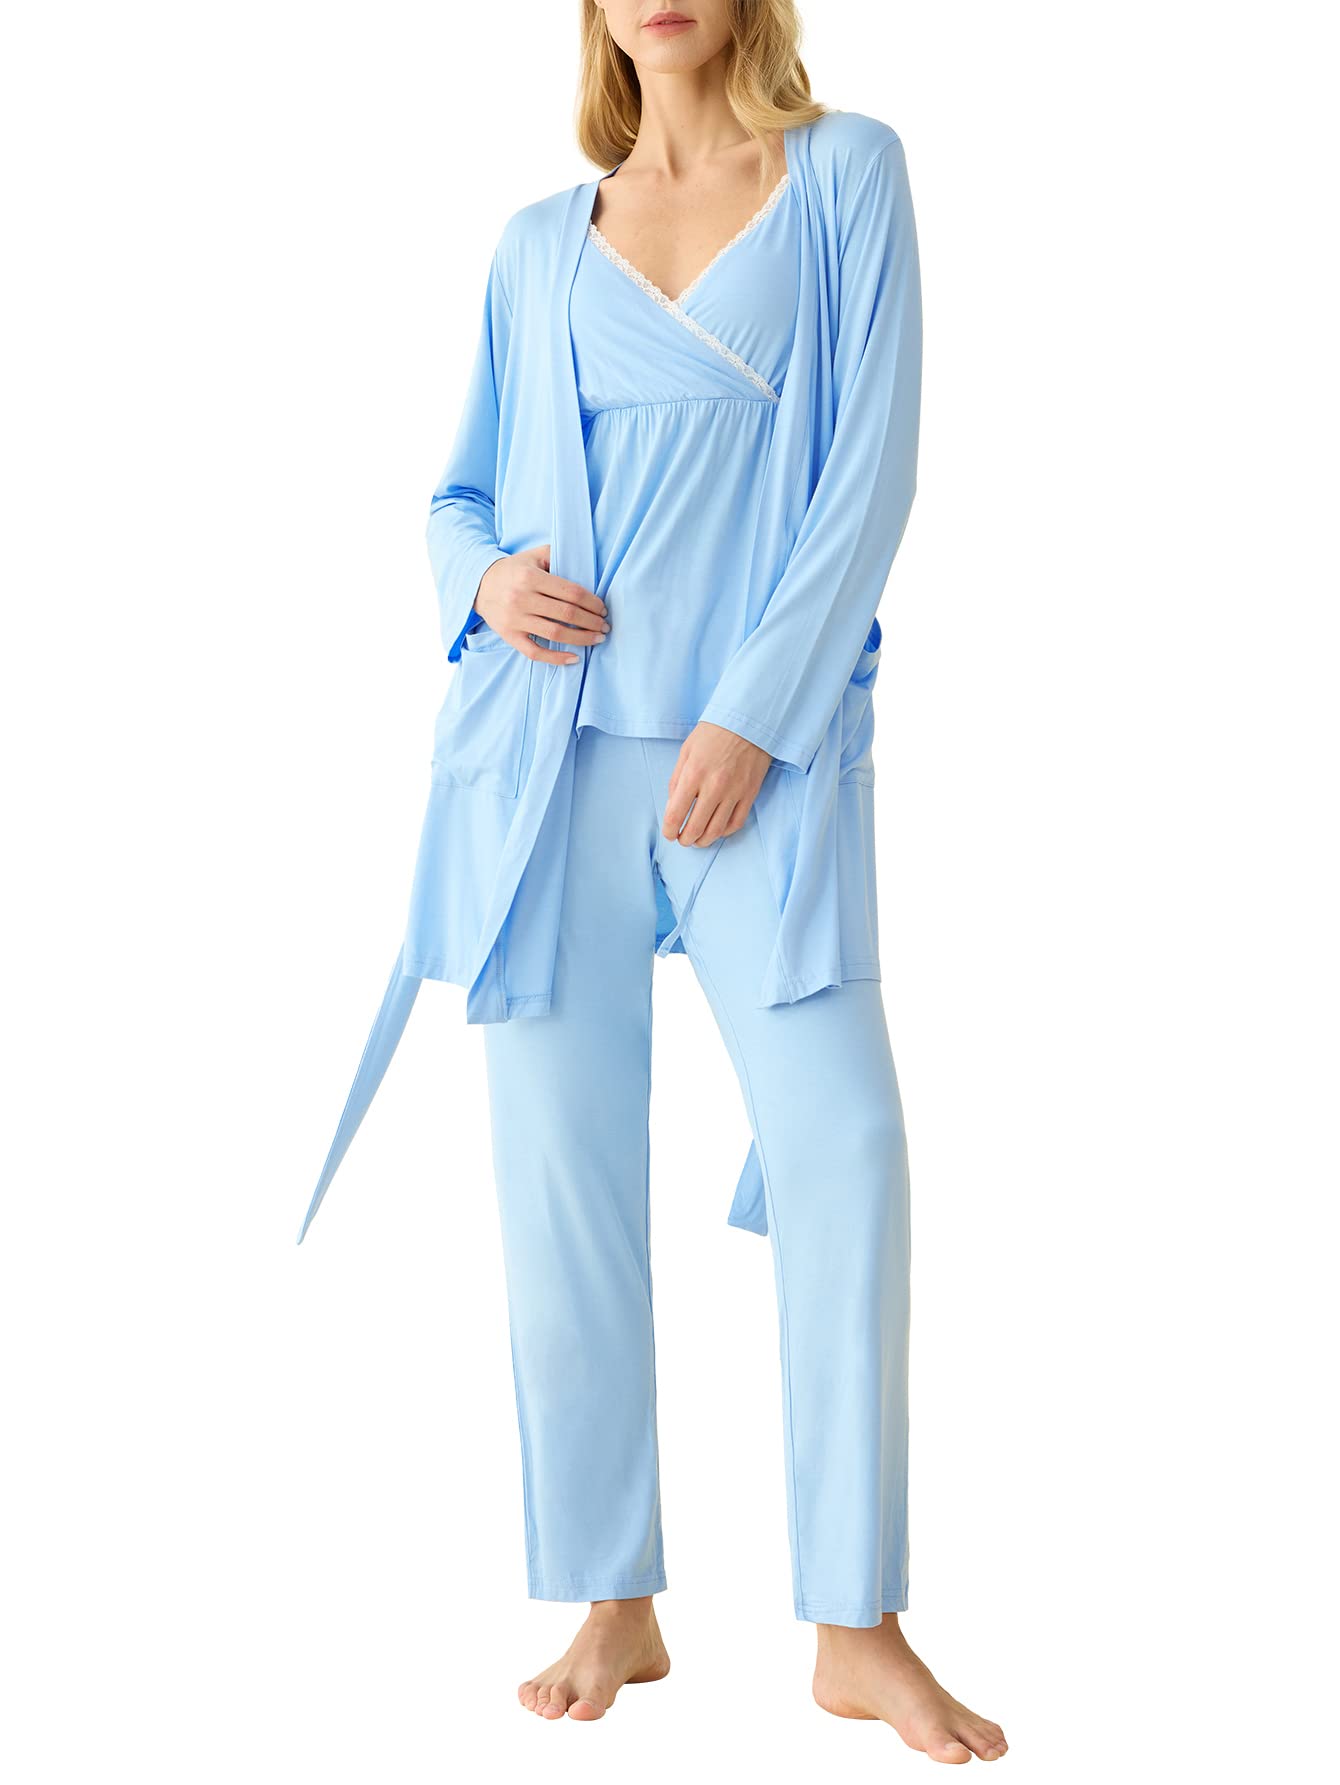 Women's Bamboo Viscose 3 Piece Nursing Pajama Set with Robe - Latuza